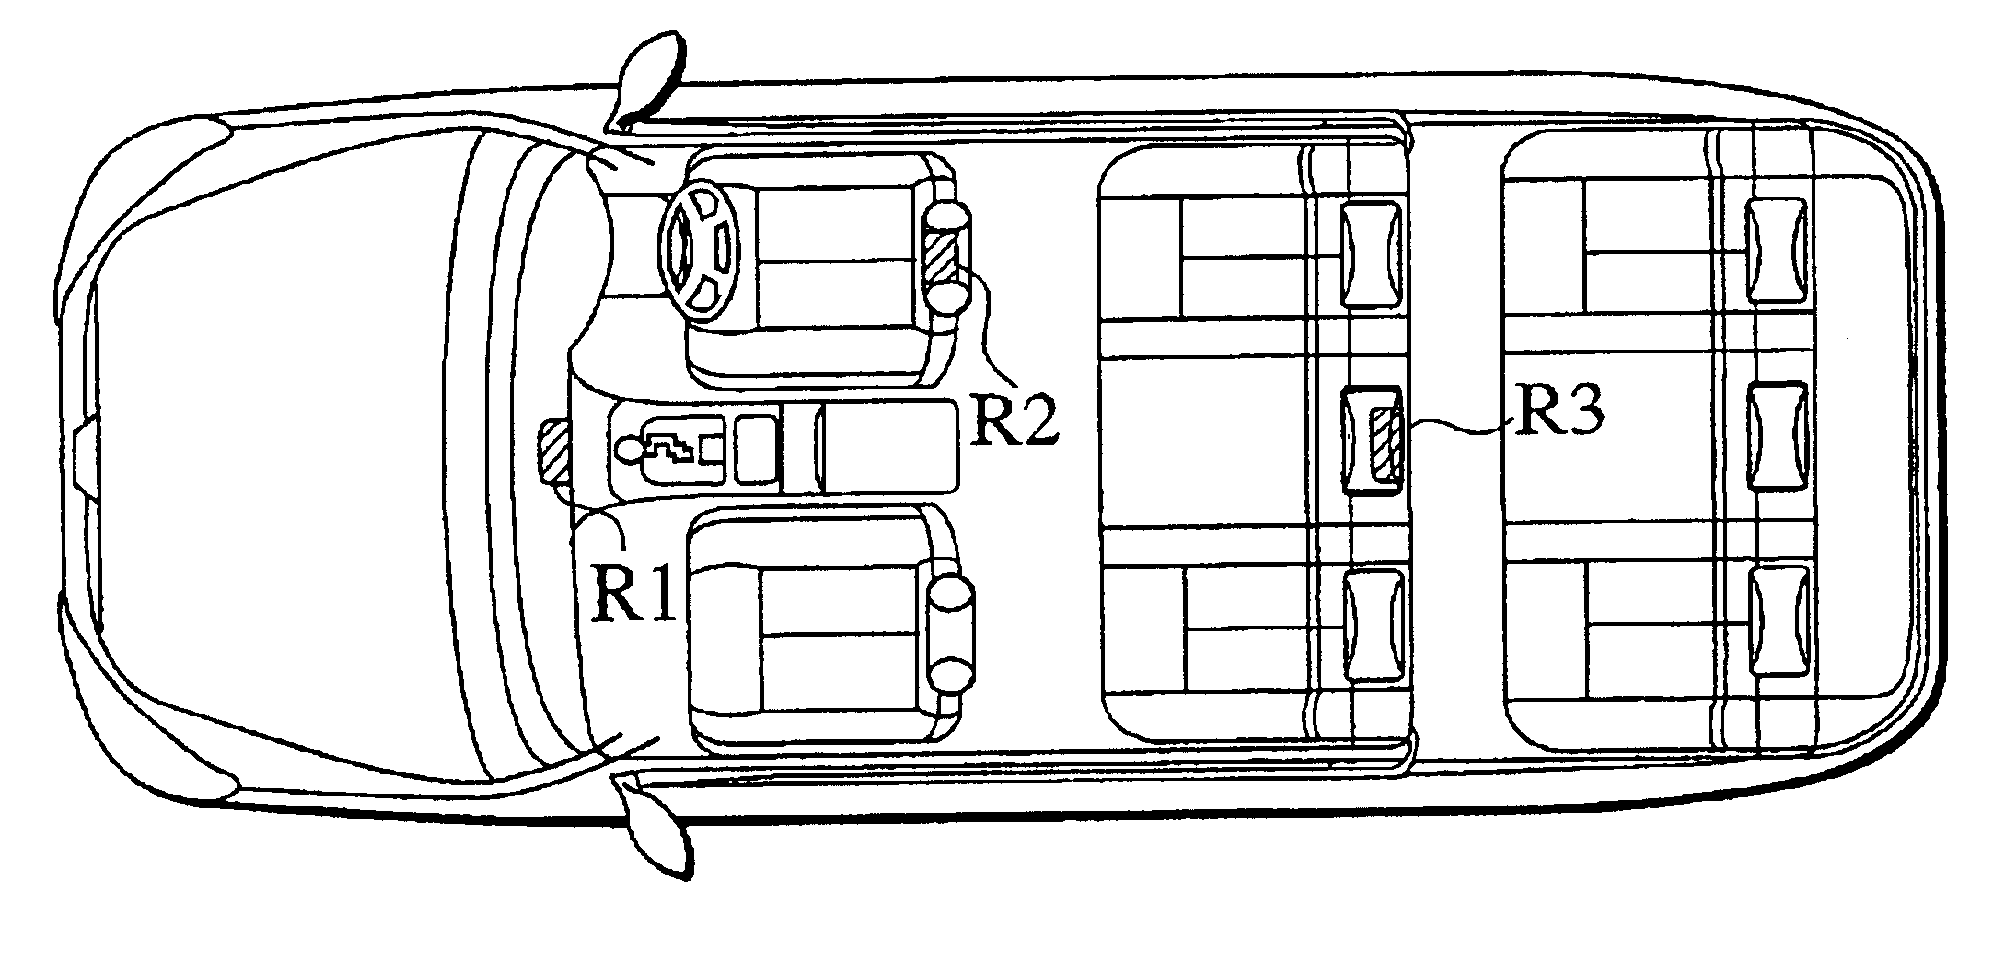 Vehicle compartment radio LAN system